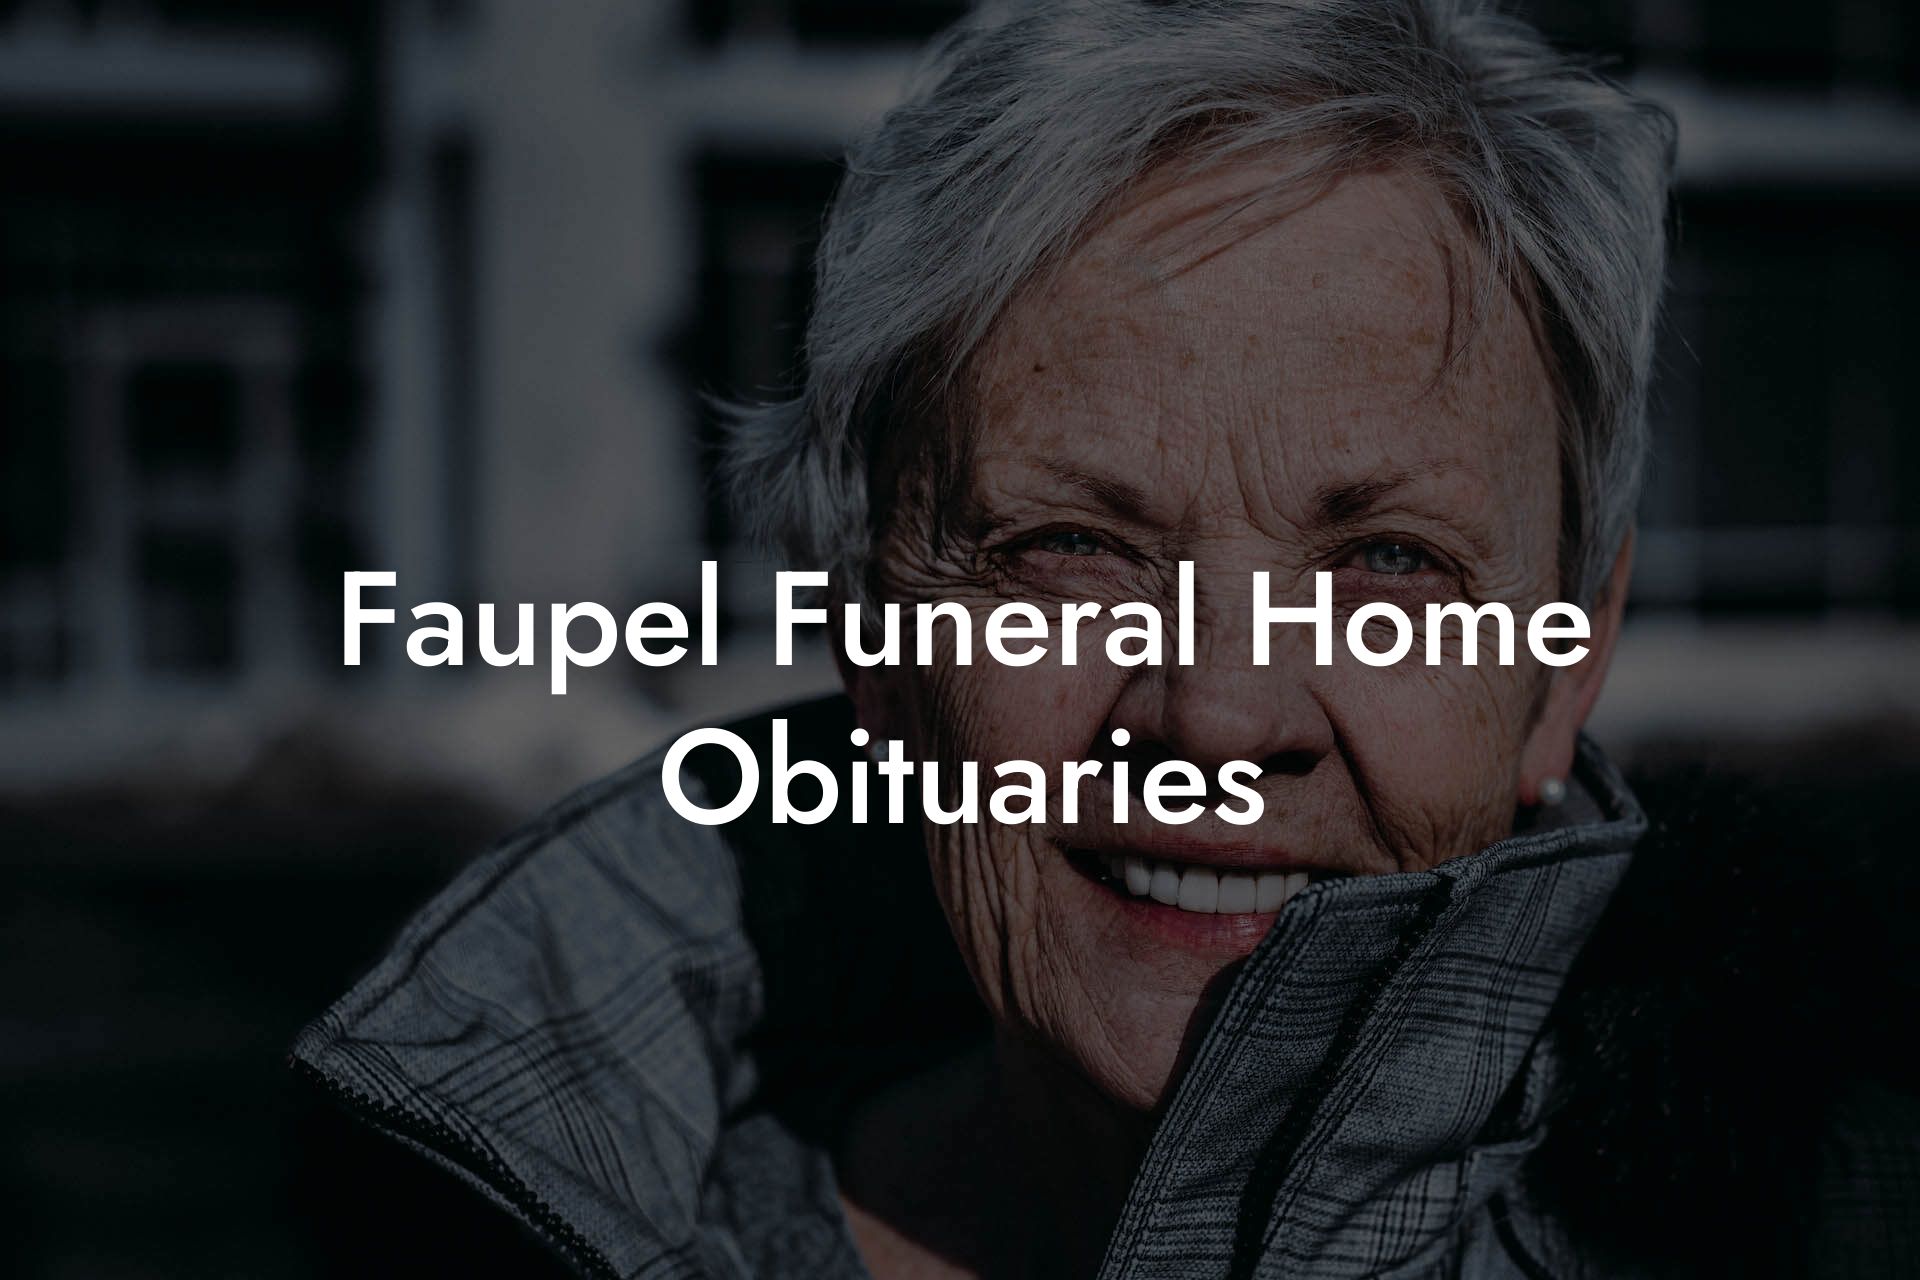 Faupel Funeral Home Obituaries